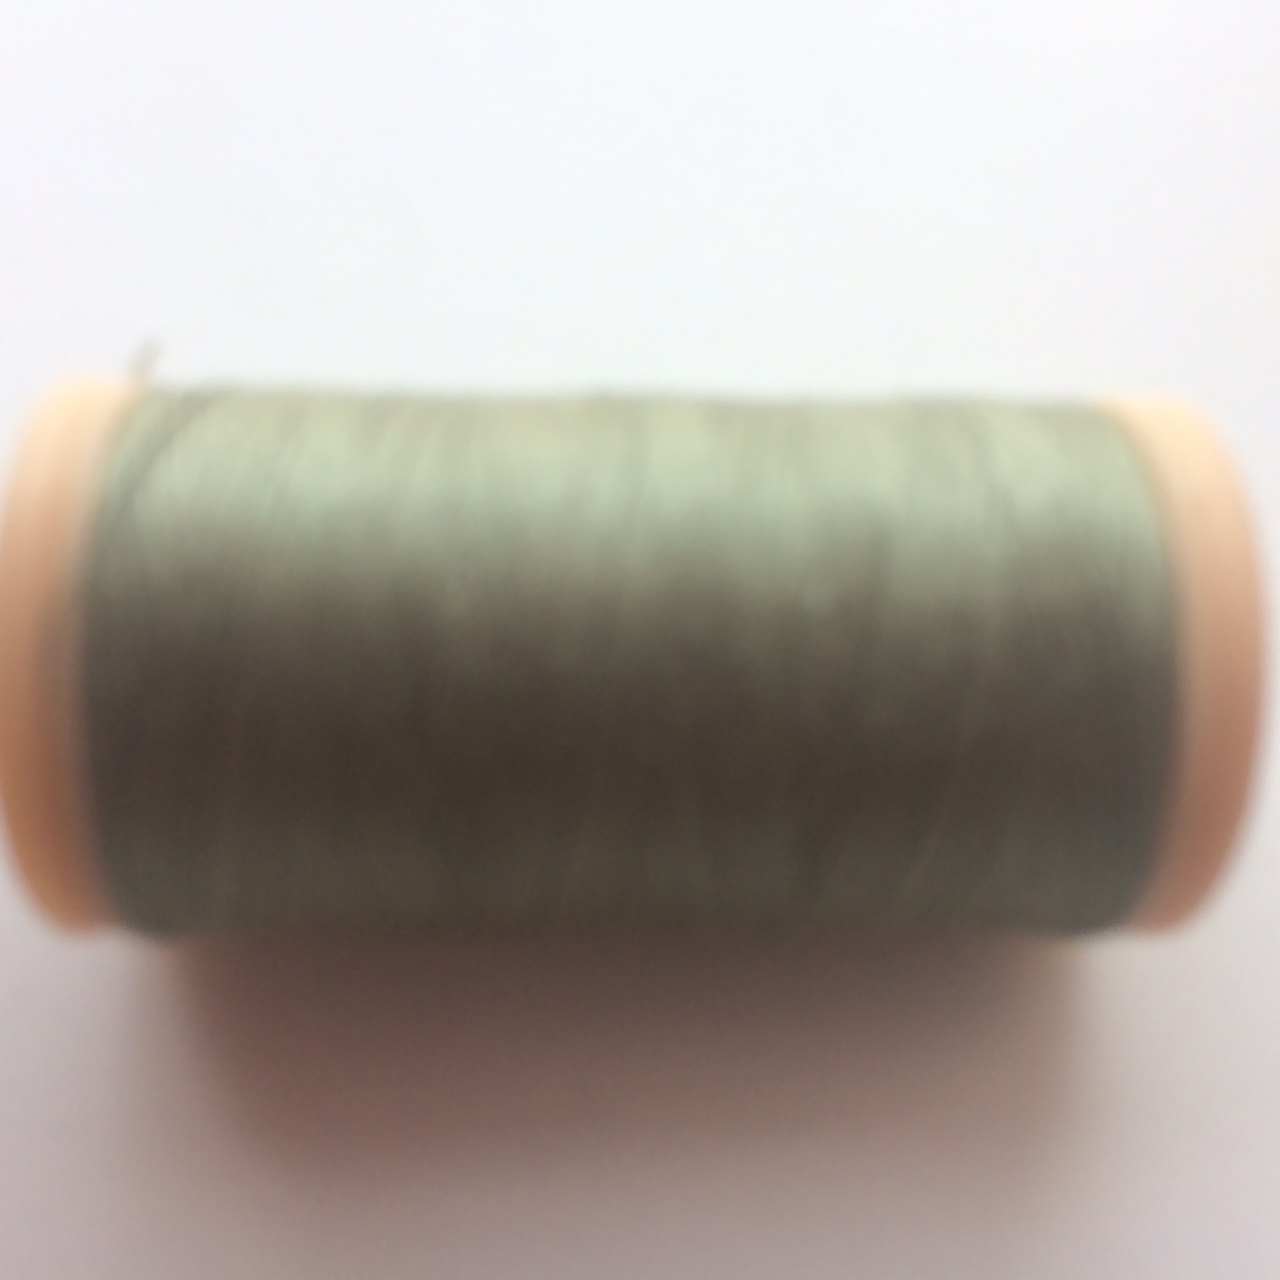 Nähfaden COATS Cotton merc. 50/100m Farbe 5323